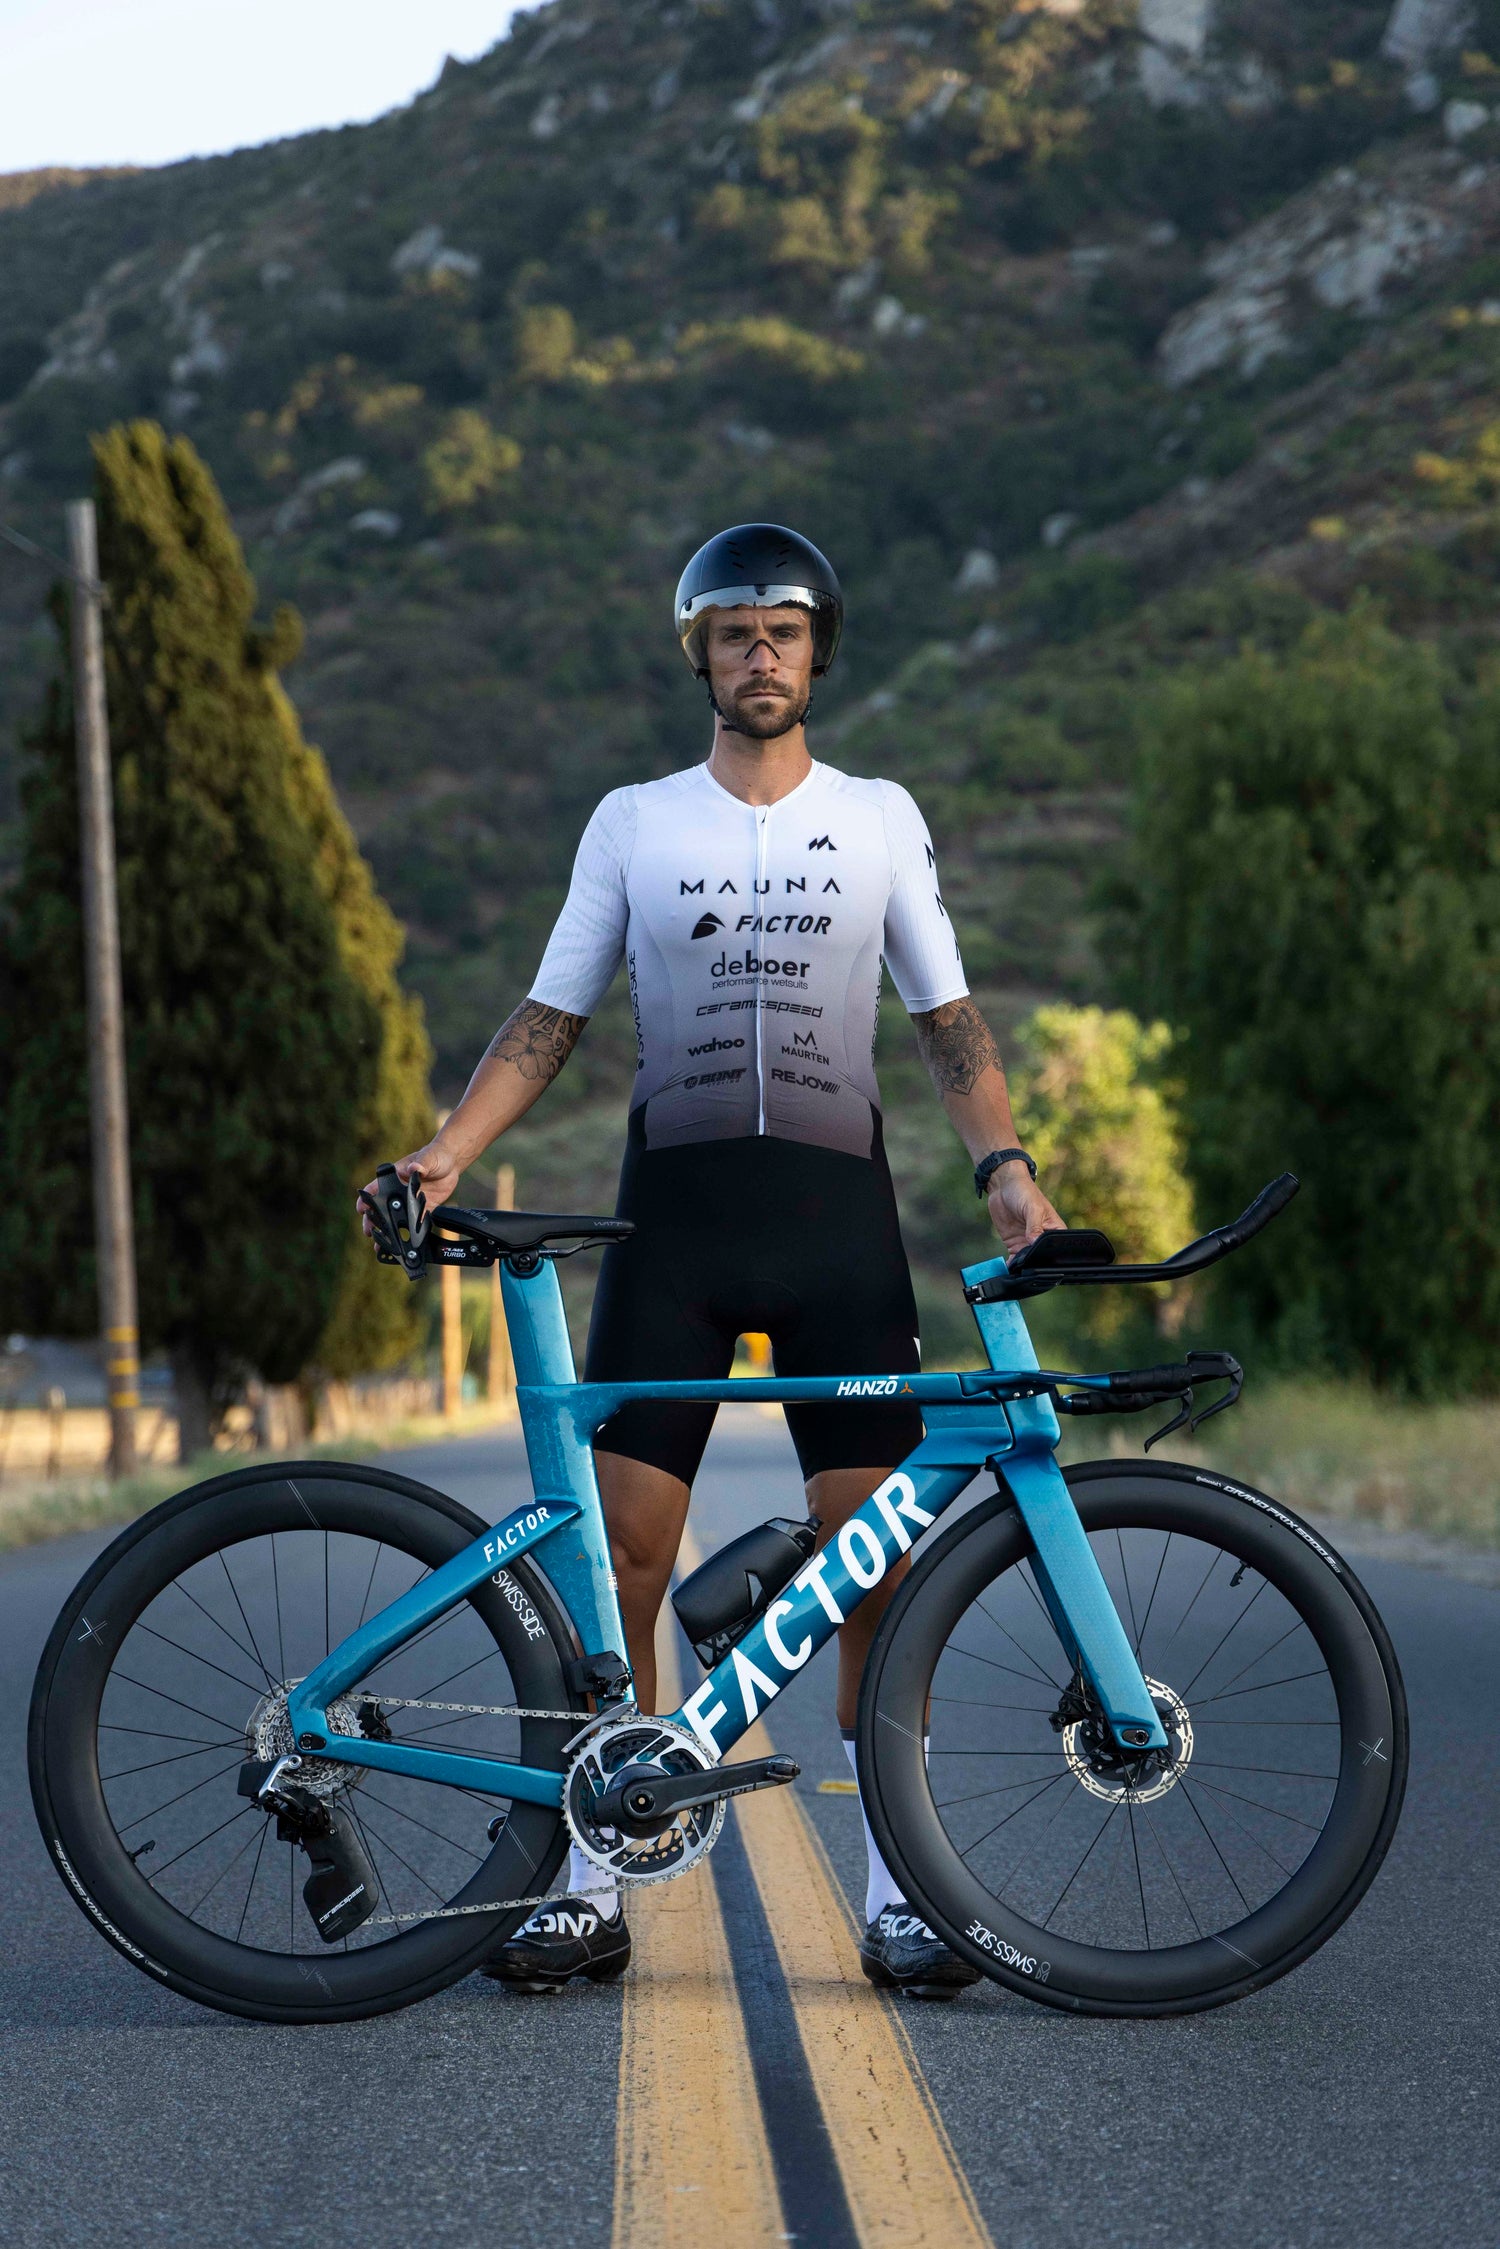 Man standing next to bicycle wearing Mauna's custom triathlon apparel